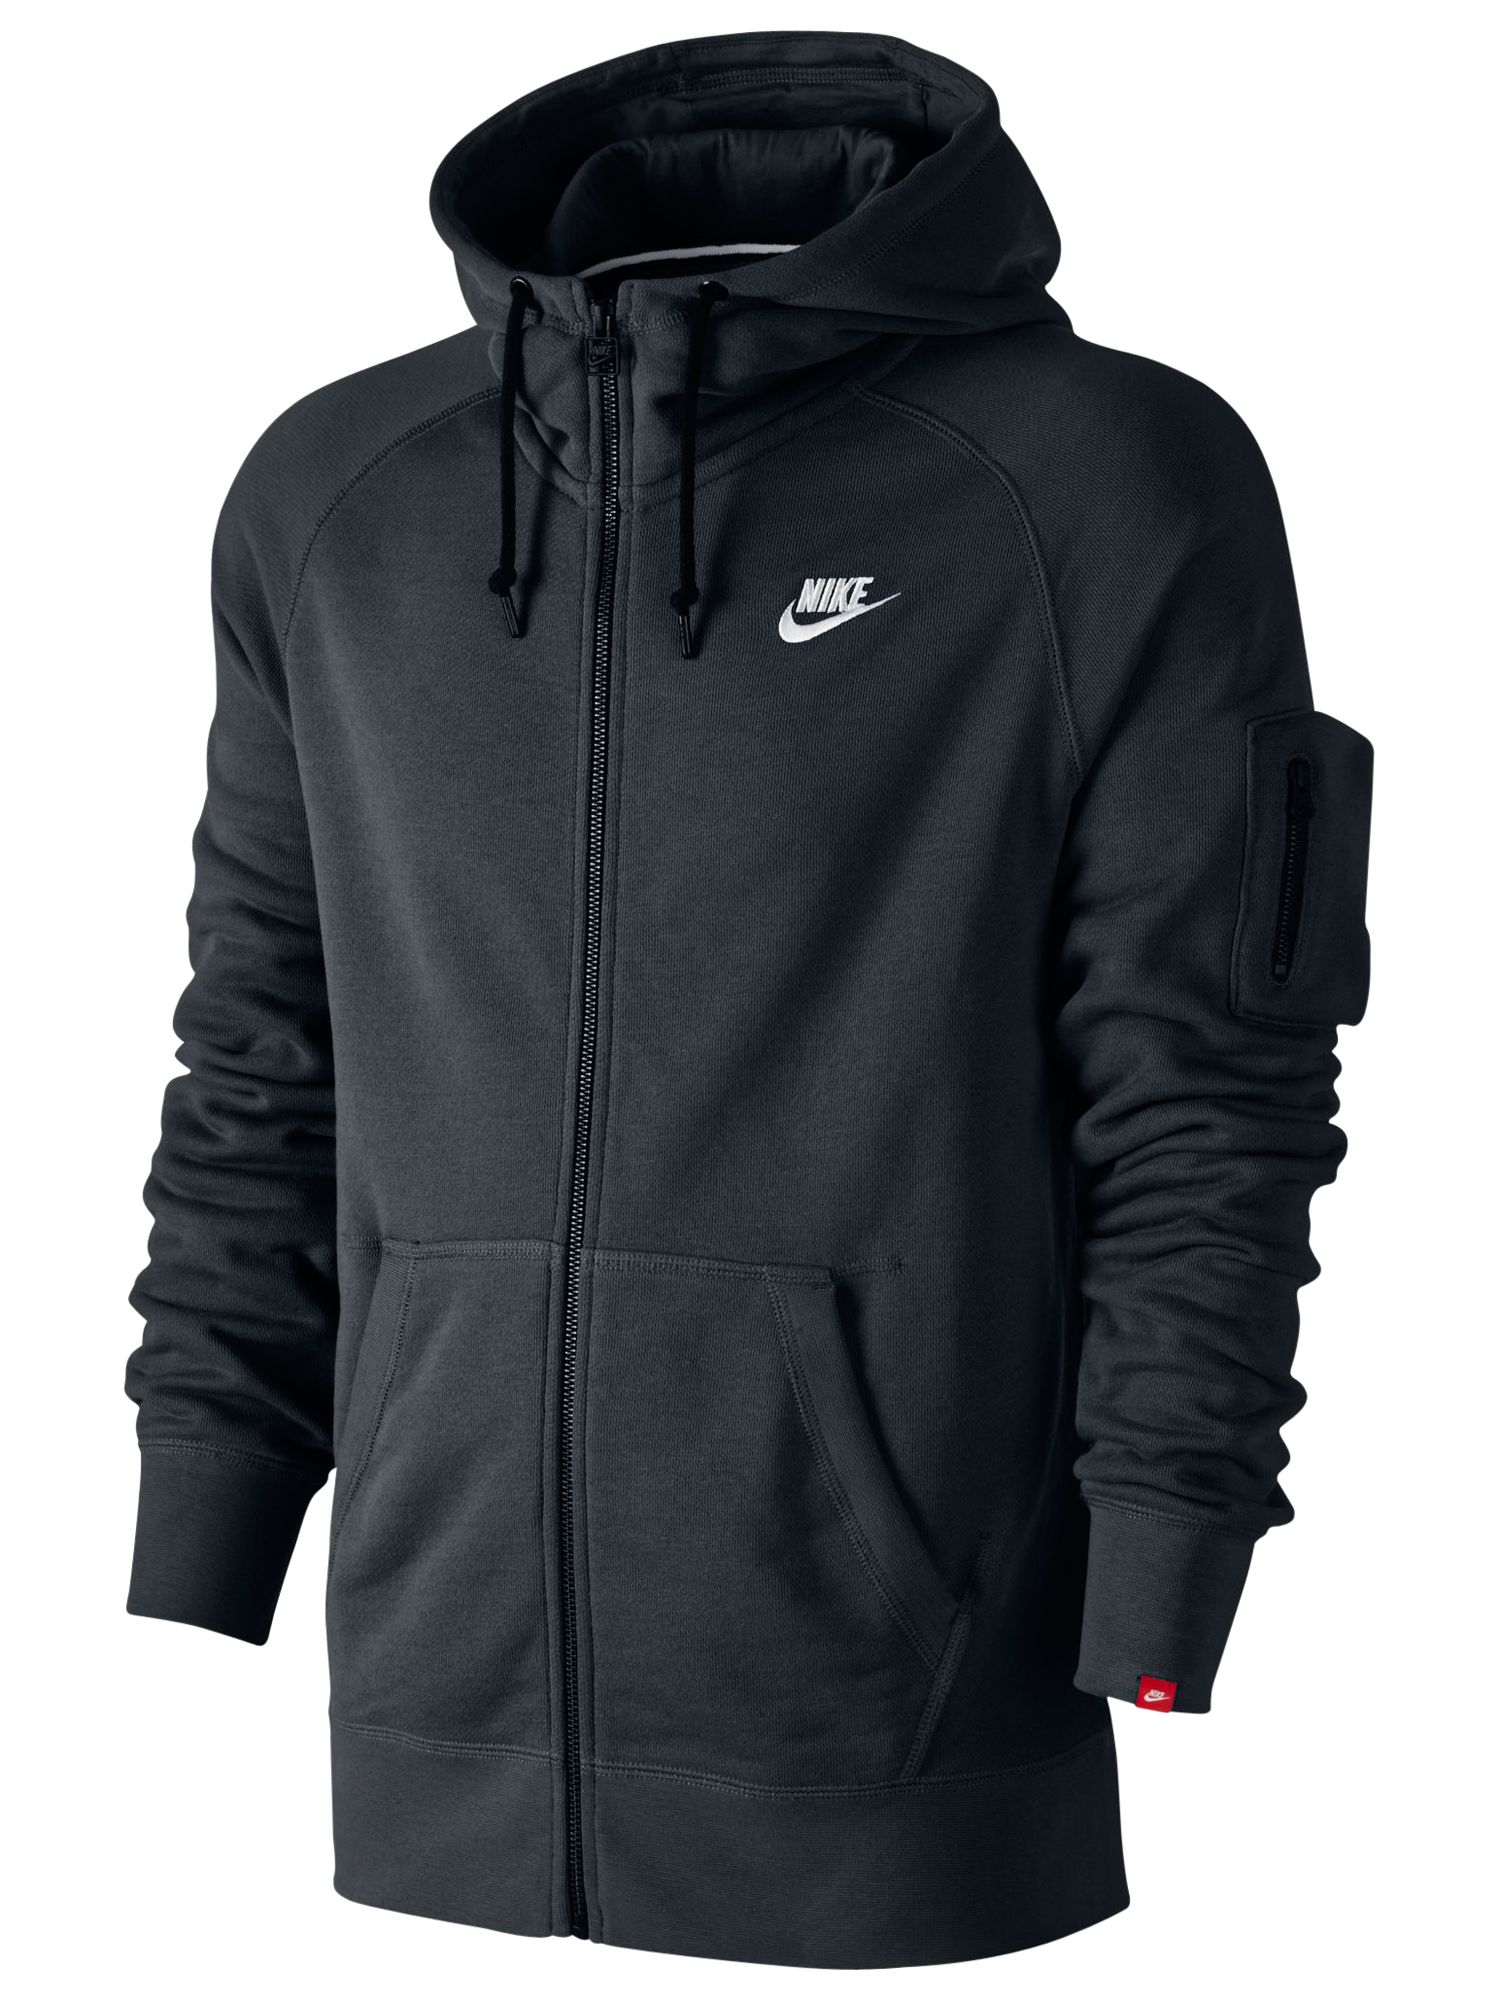 Nike AW77 Fleece Zip Training Hoodie, Black